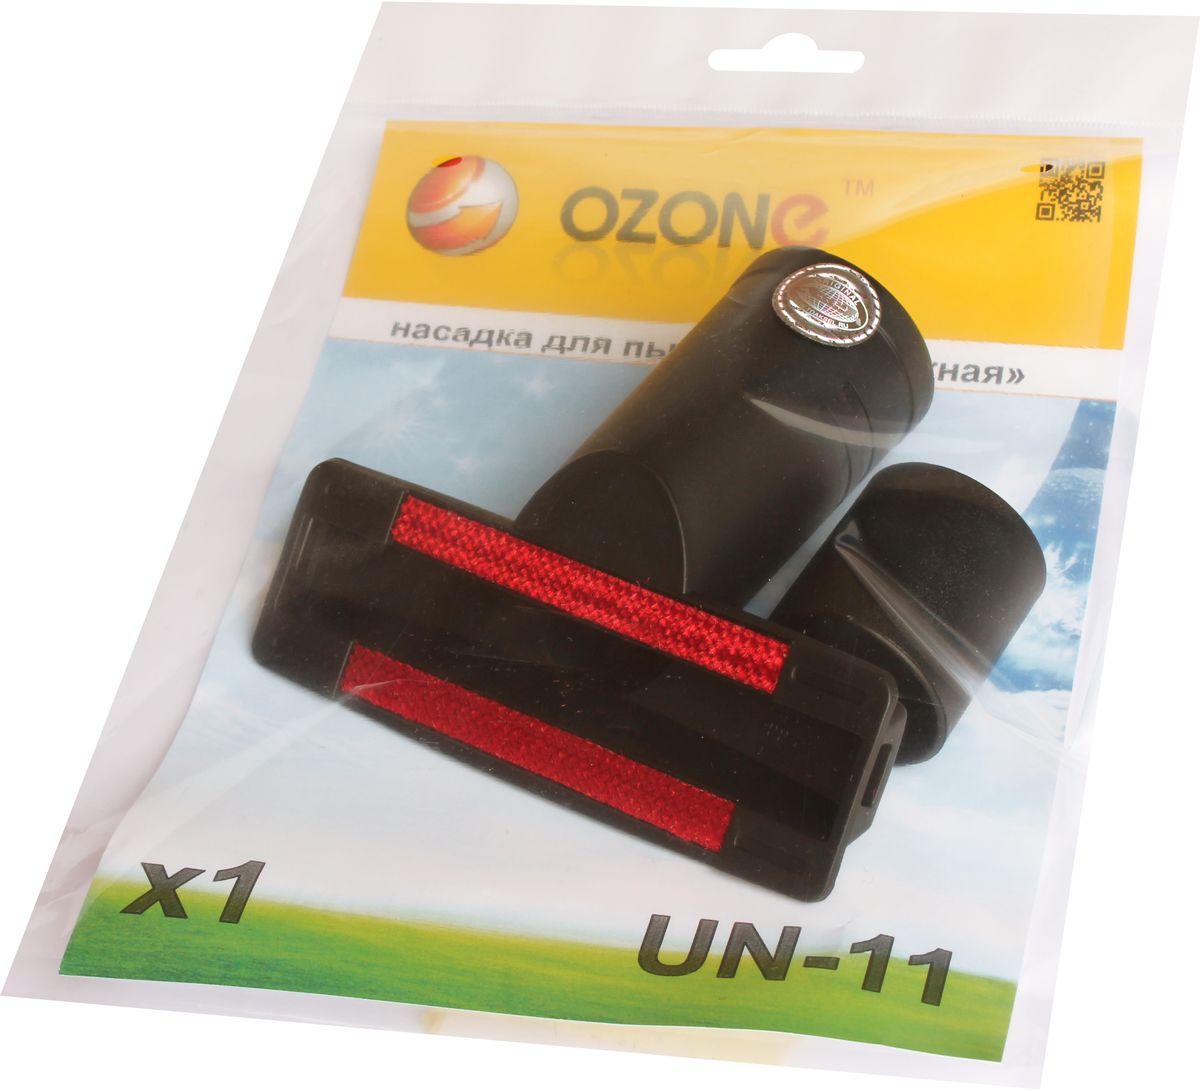 Ozone насадка для мягкой мебели un-11